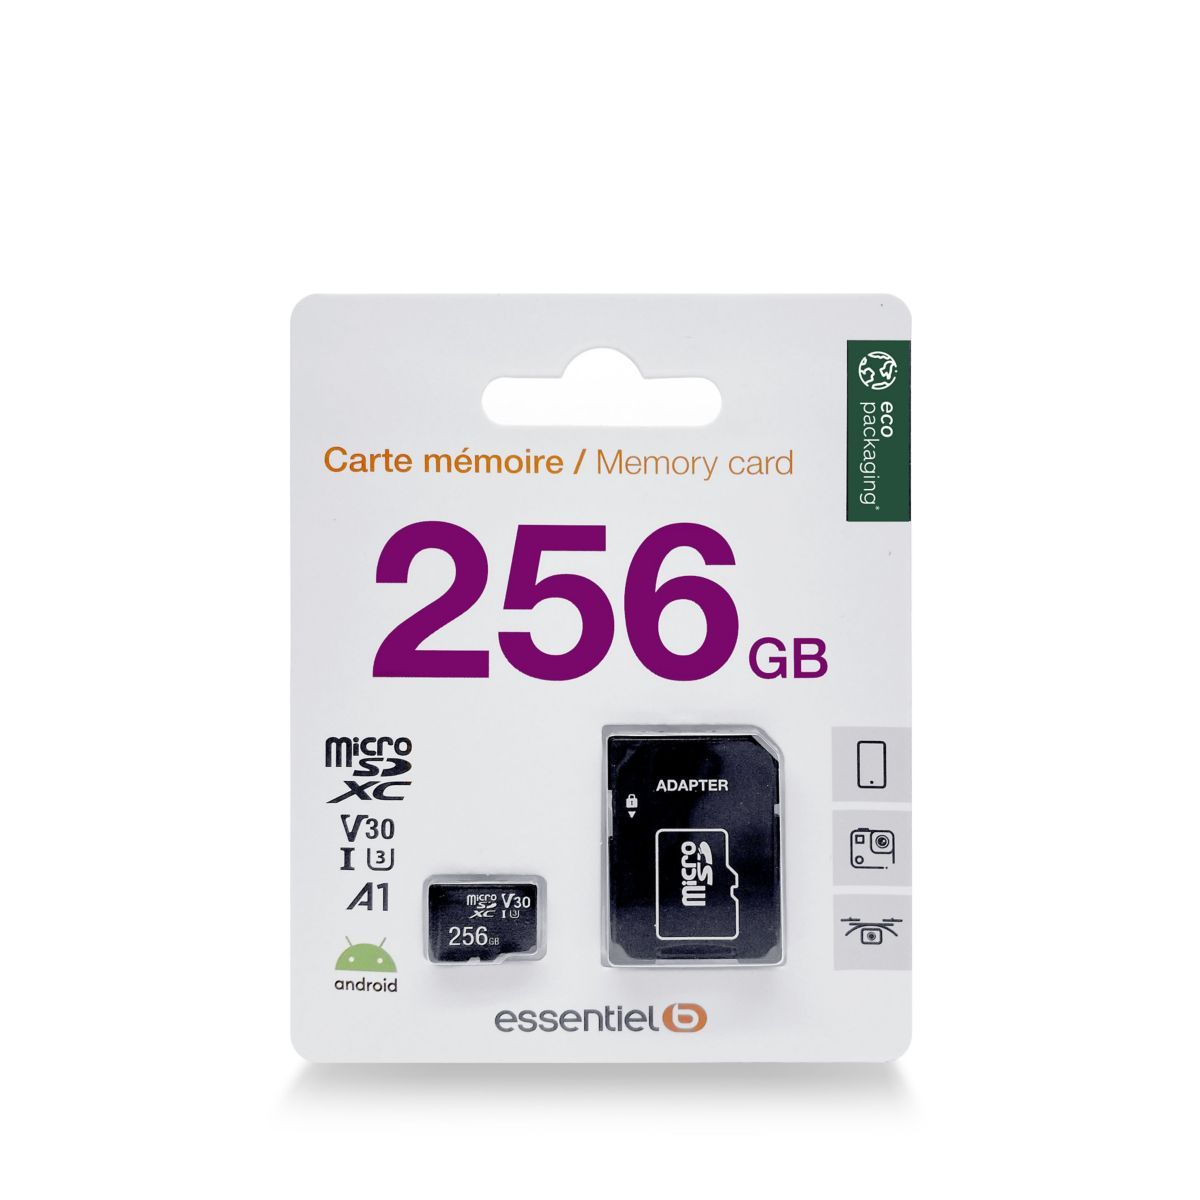 Carte microSD PRO Ultimate 128 Go avec lecteur